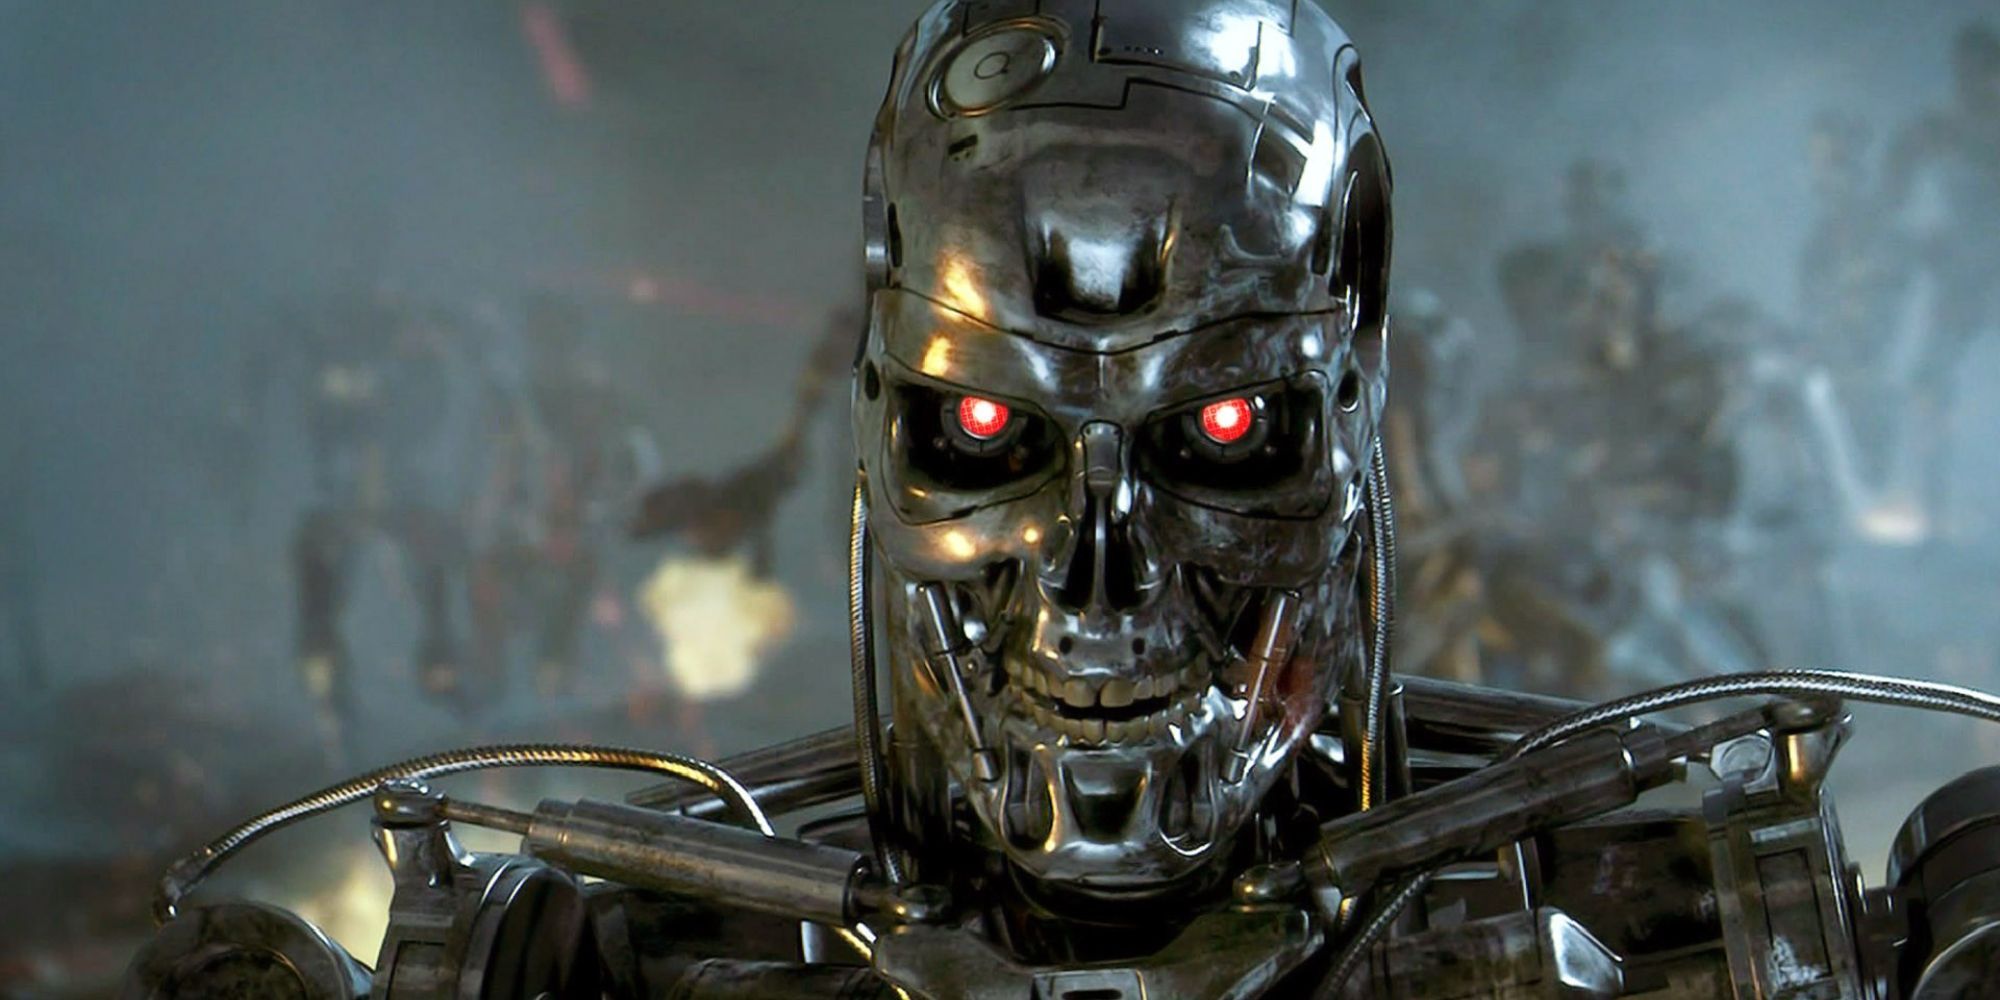 Le cyborg dans Terminator